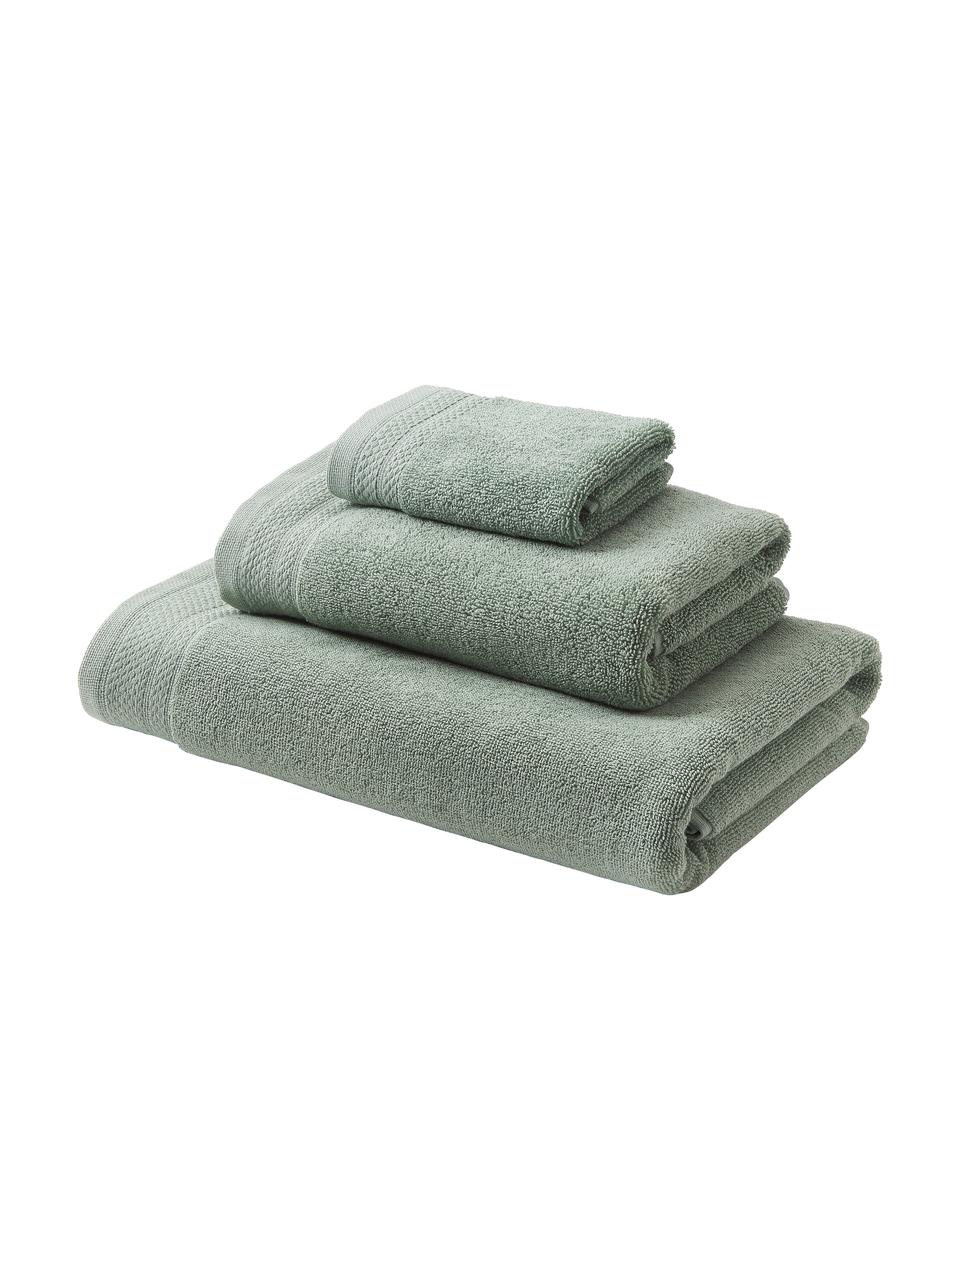 Set de toallas de algodón ecológico Premium, 3 uds., 100% algodón ecológico con certificado GOTS (por GCL International, GCL-300517)
Gramaje superior 600 g/m², Verde salvia, Set de diferentes tamaños